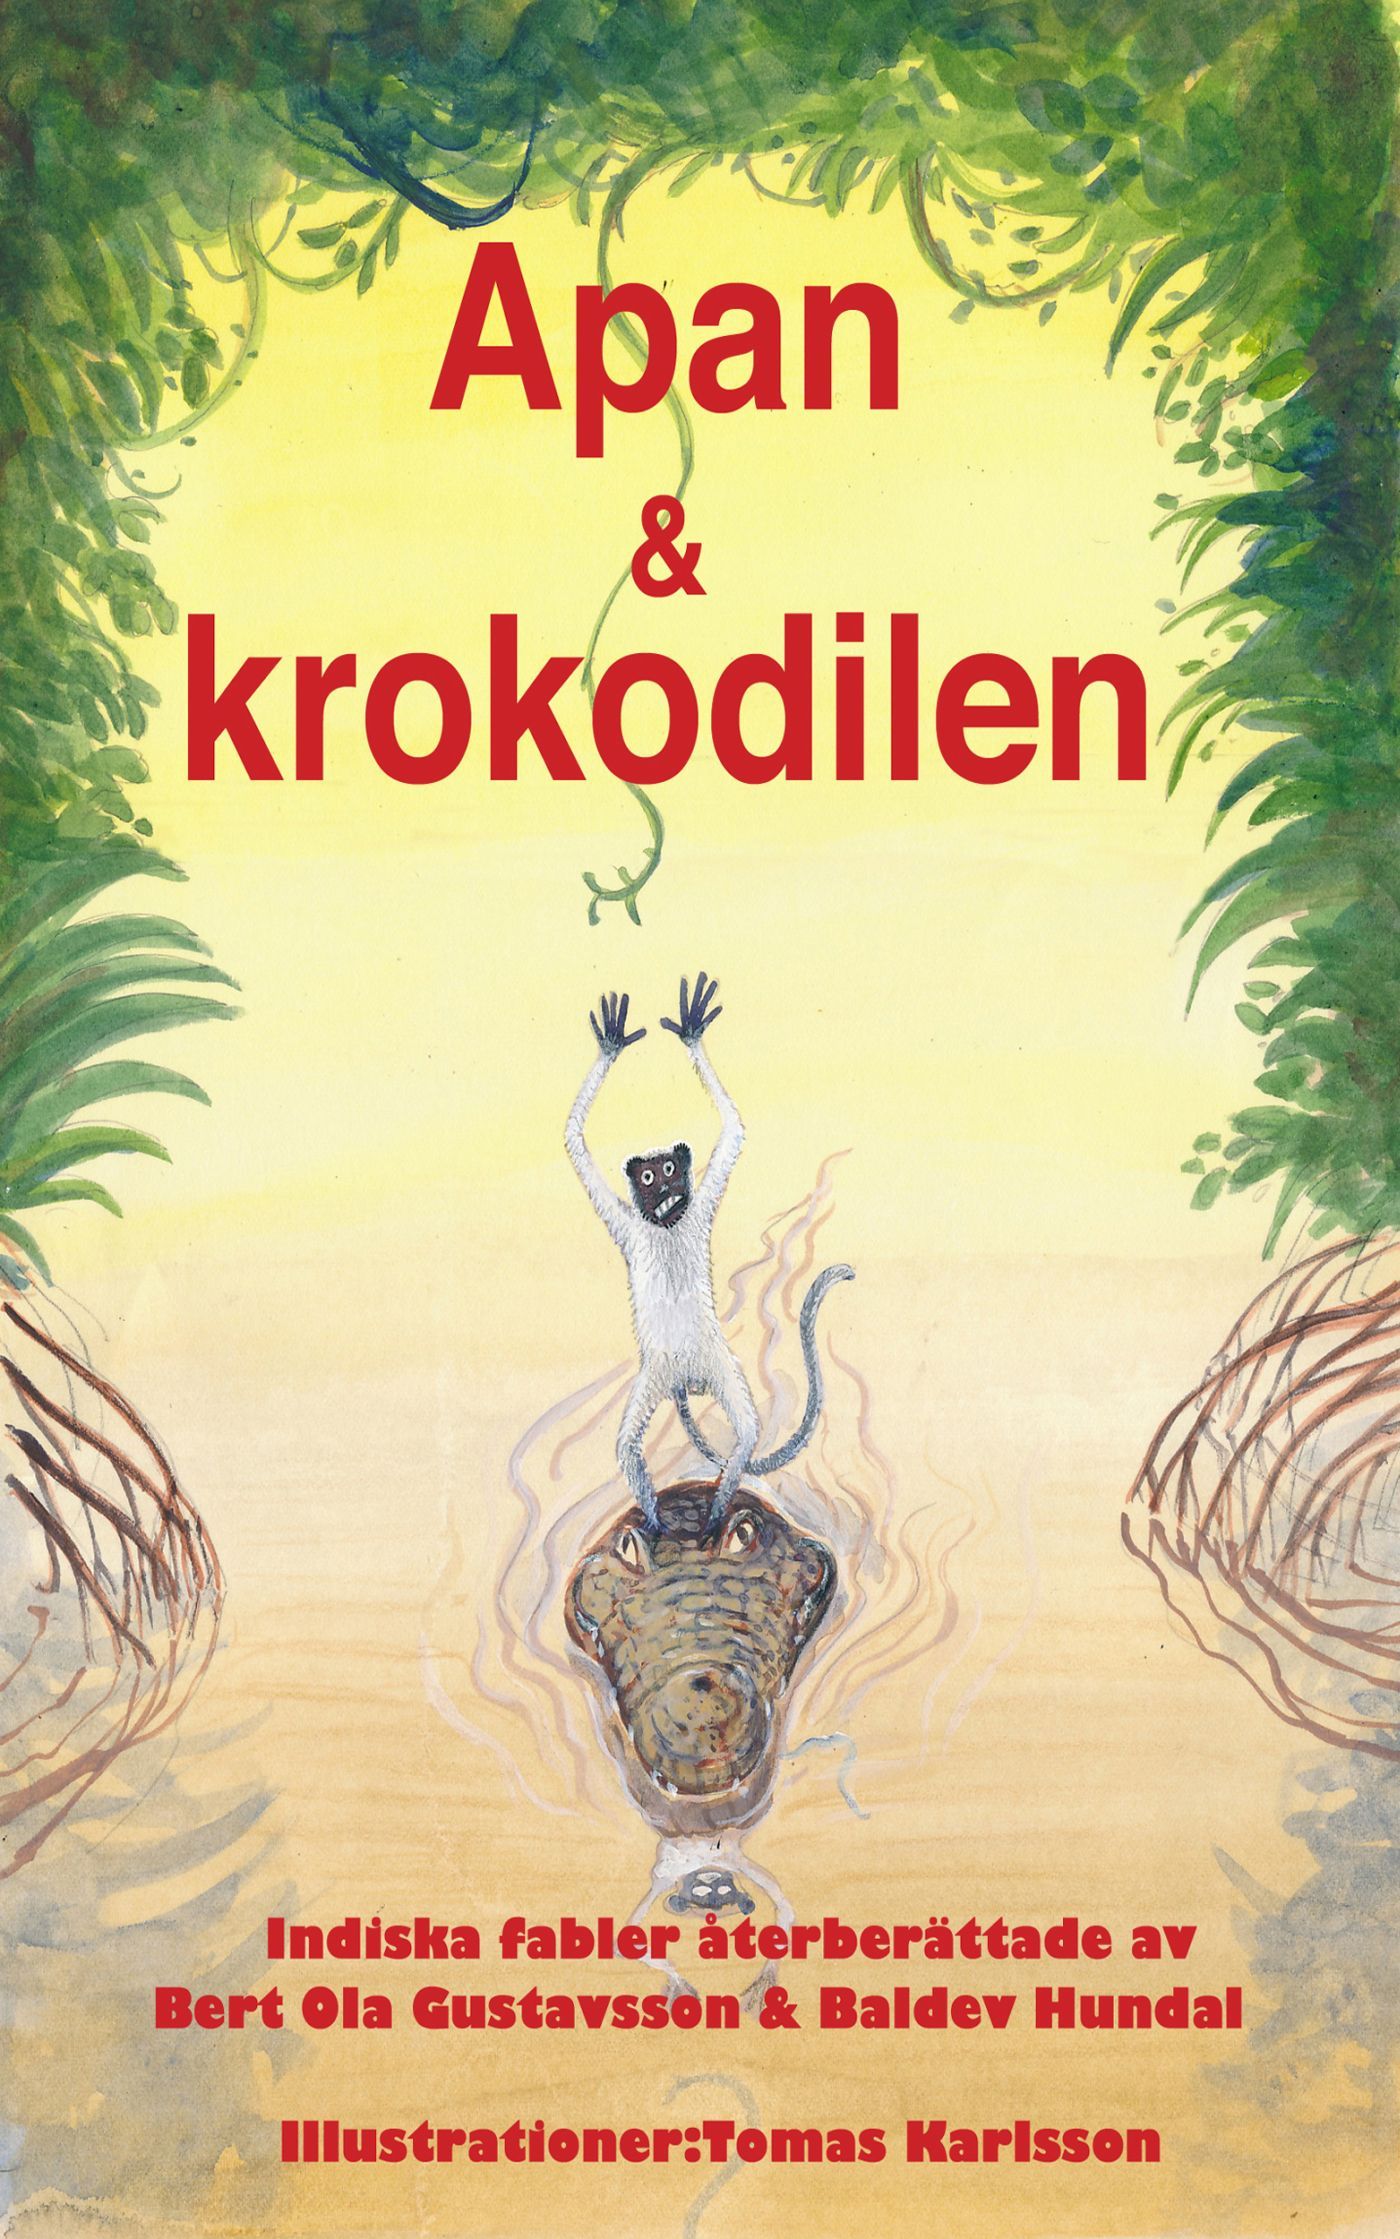 Apan & krokodilen, e-bog af Bert Ola Gustavsson, Baldev Hundal